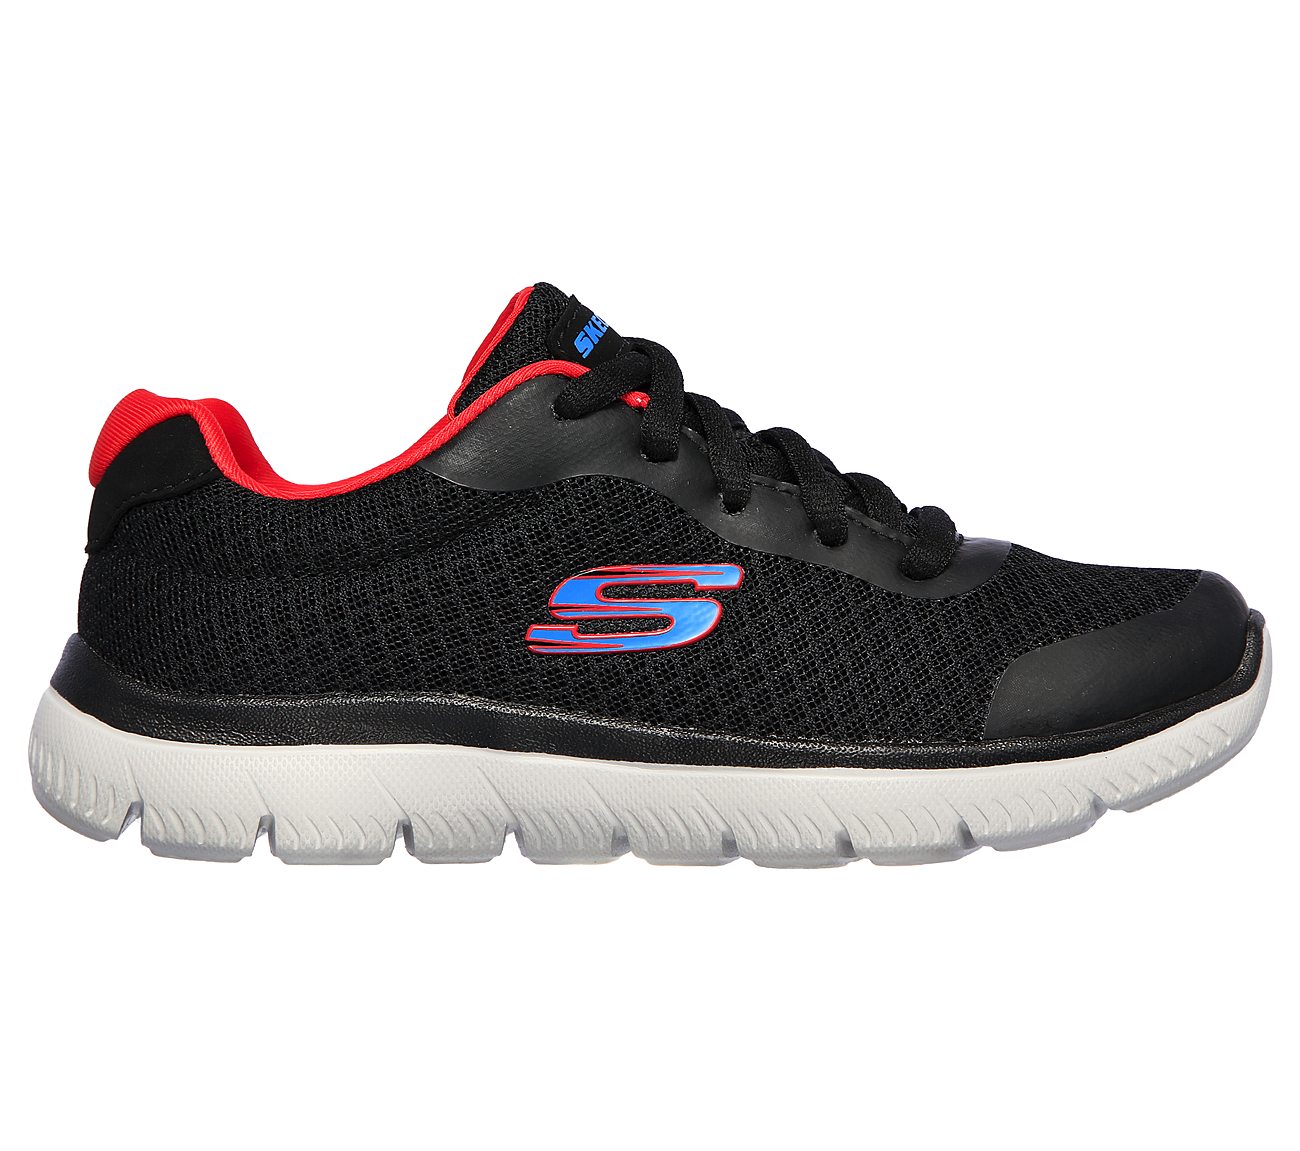 SUMMITS-LOWIX, BLACK/RED/BLUE Footwear Right View